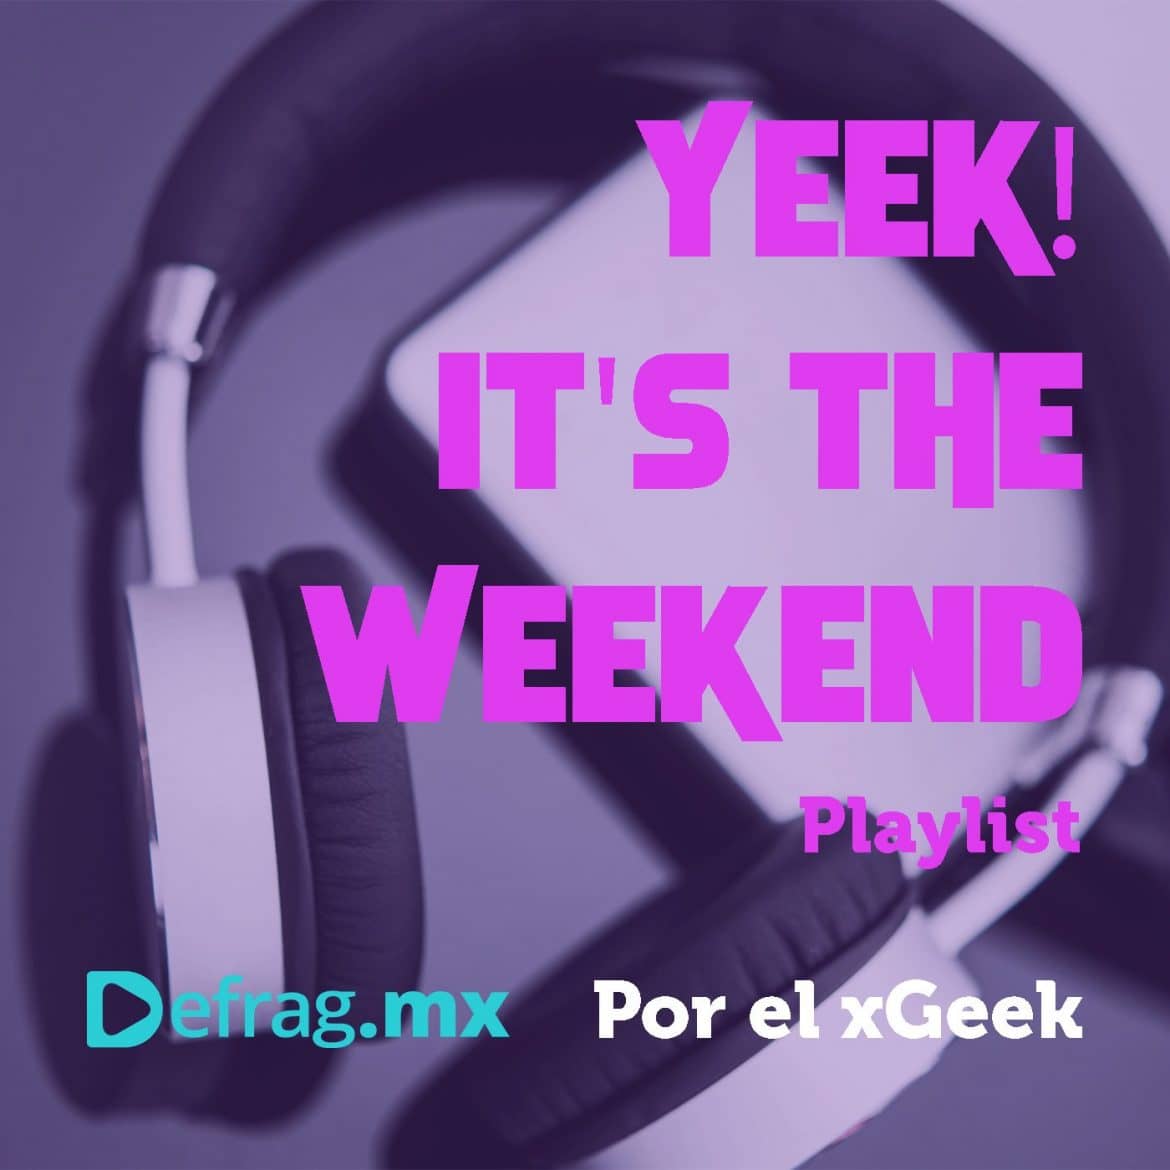 Defrag.mx Yeek! It's The Weekend Playlist Música Top HIts Oct 07 2022